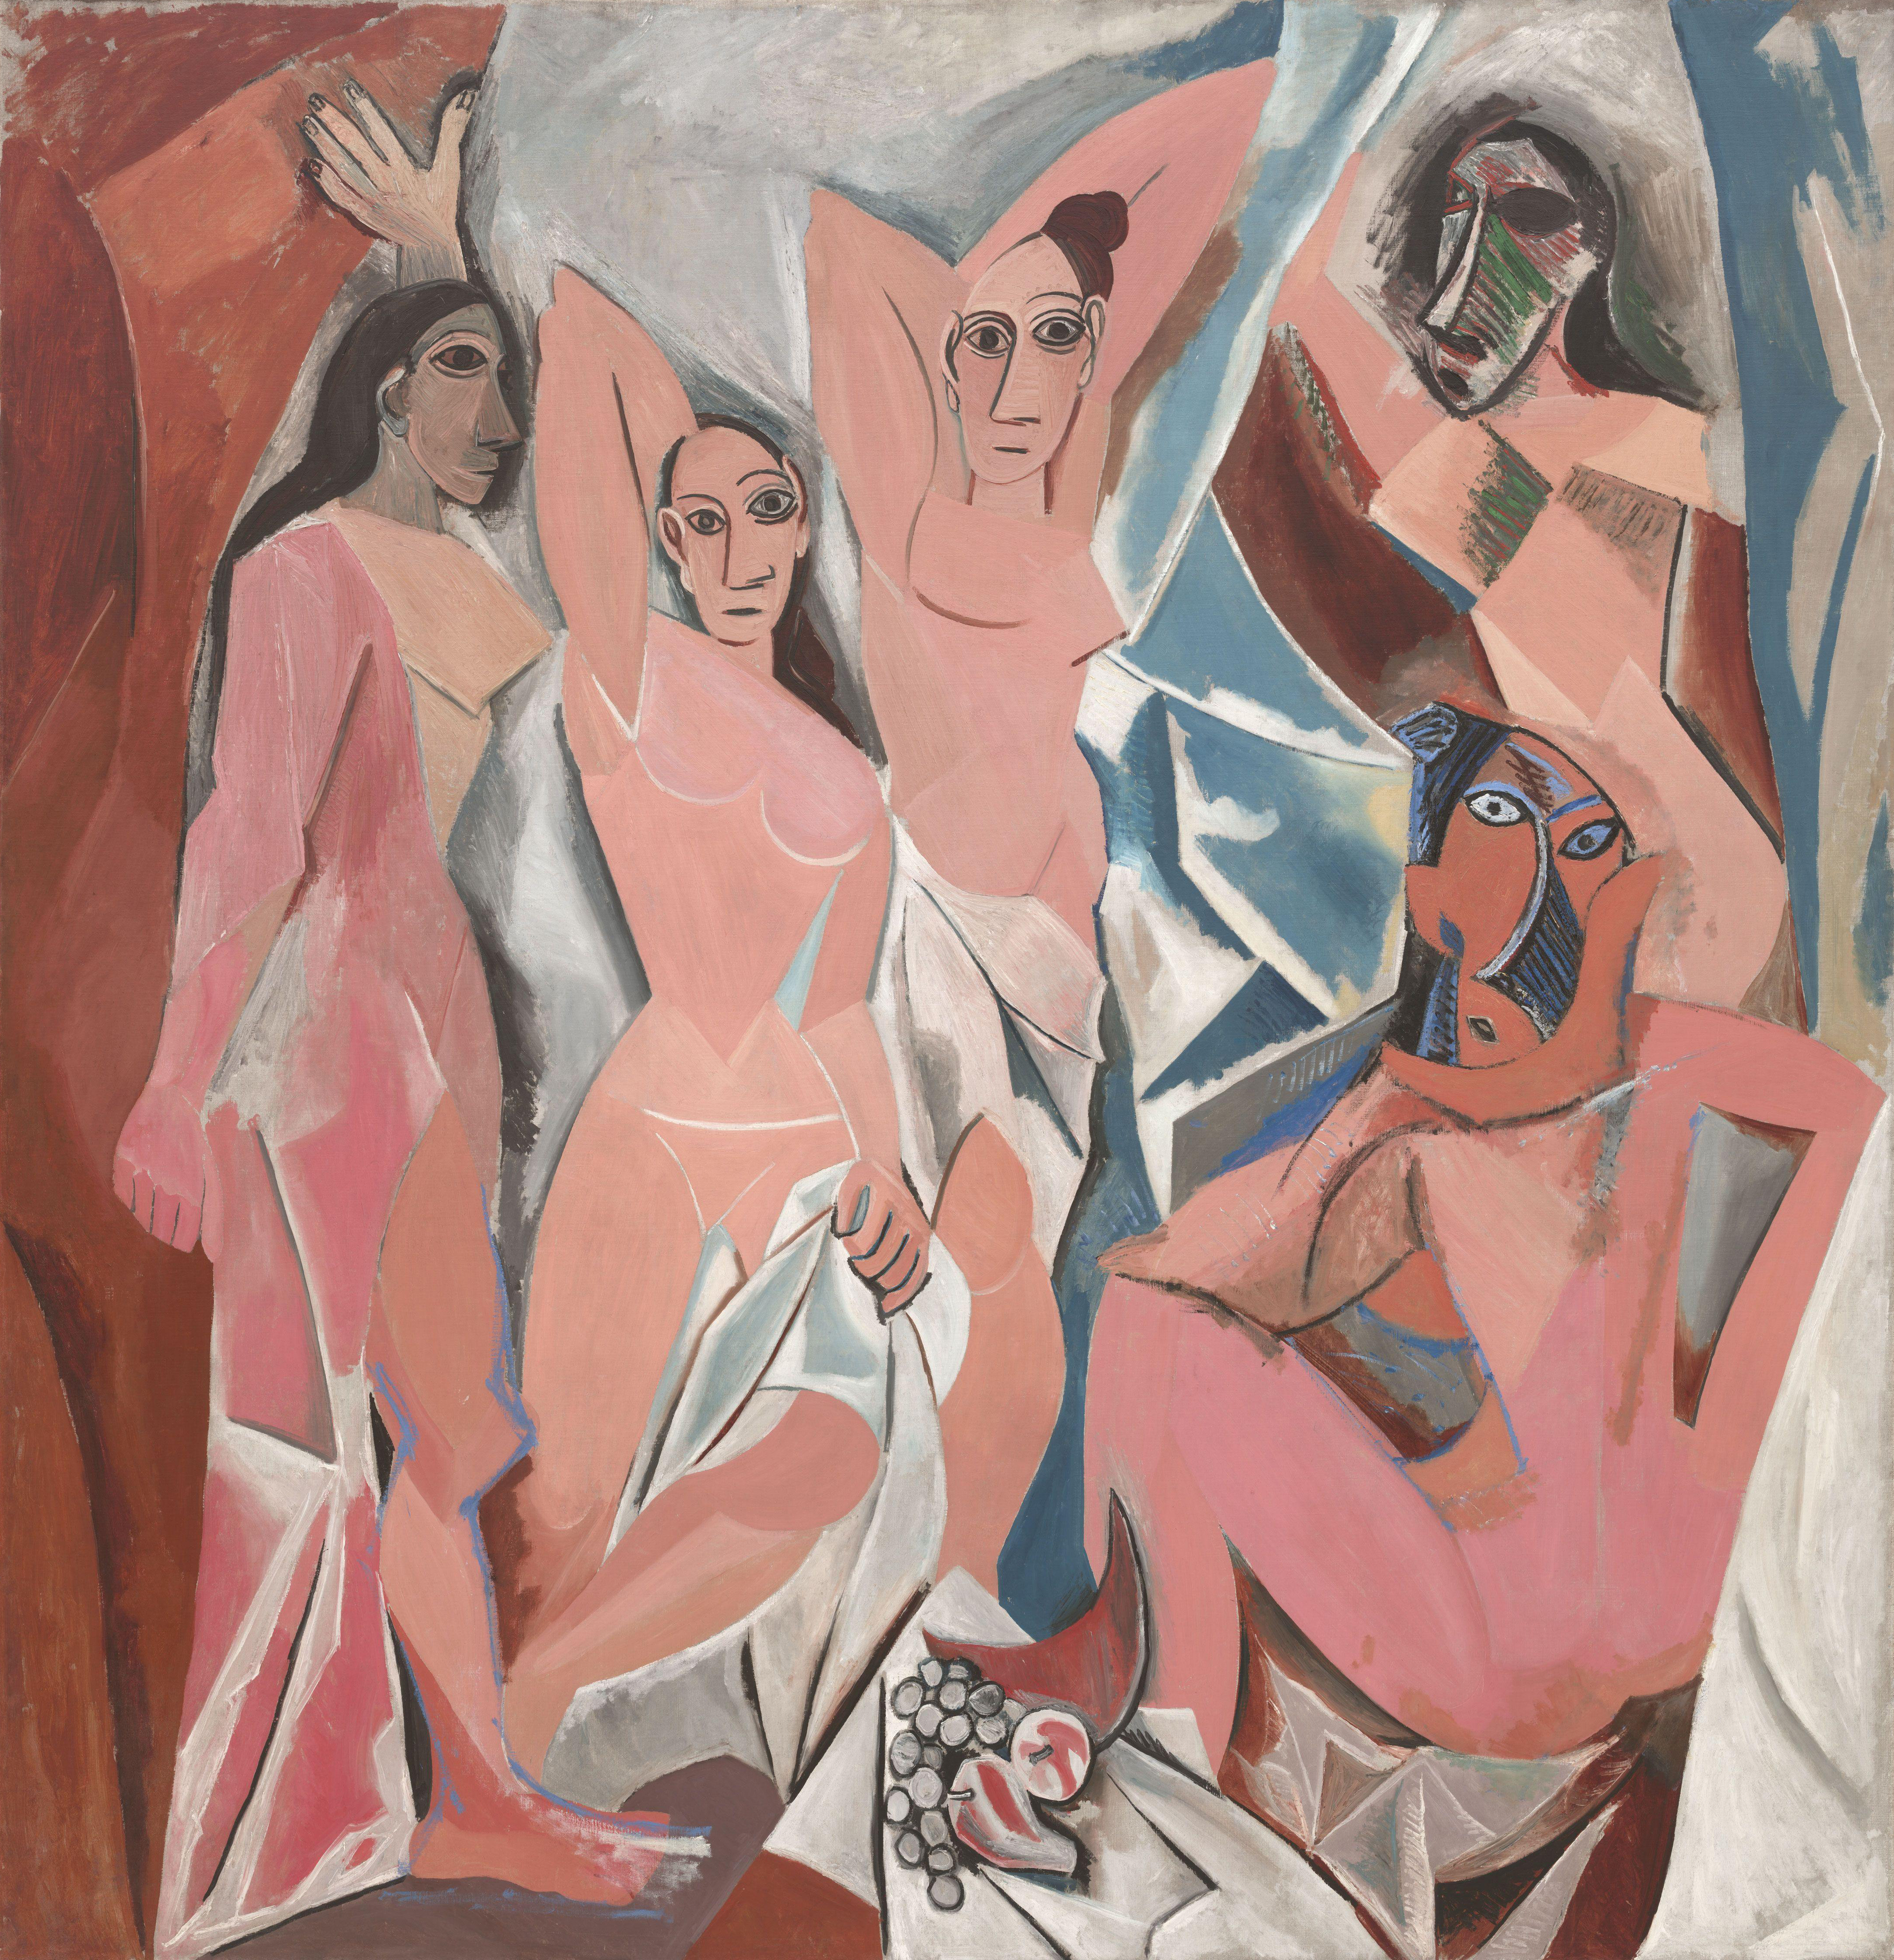 Pablo Picasso, Les Demoiselles d’Avignon, 1907. Oil on canvas. The Museum of Modern Art, New York